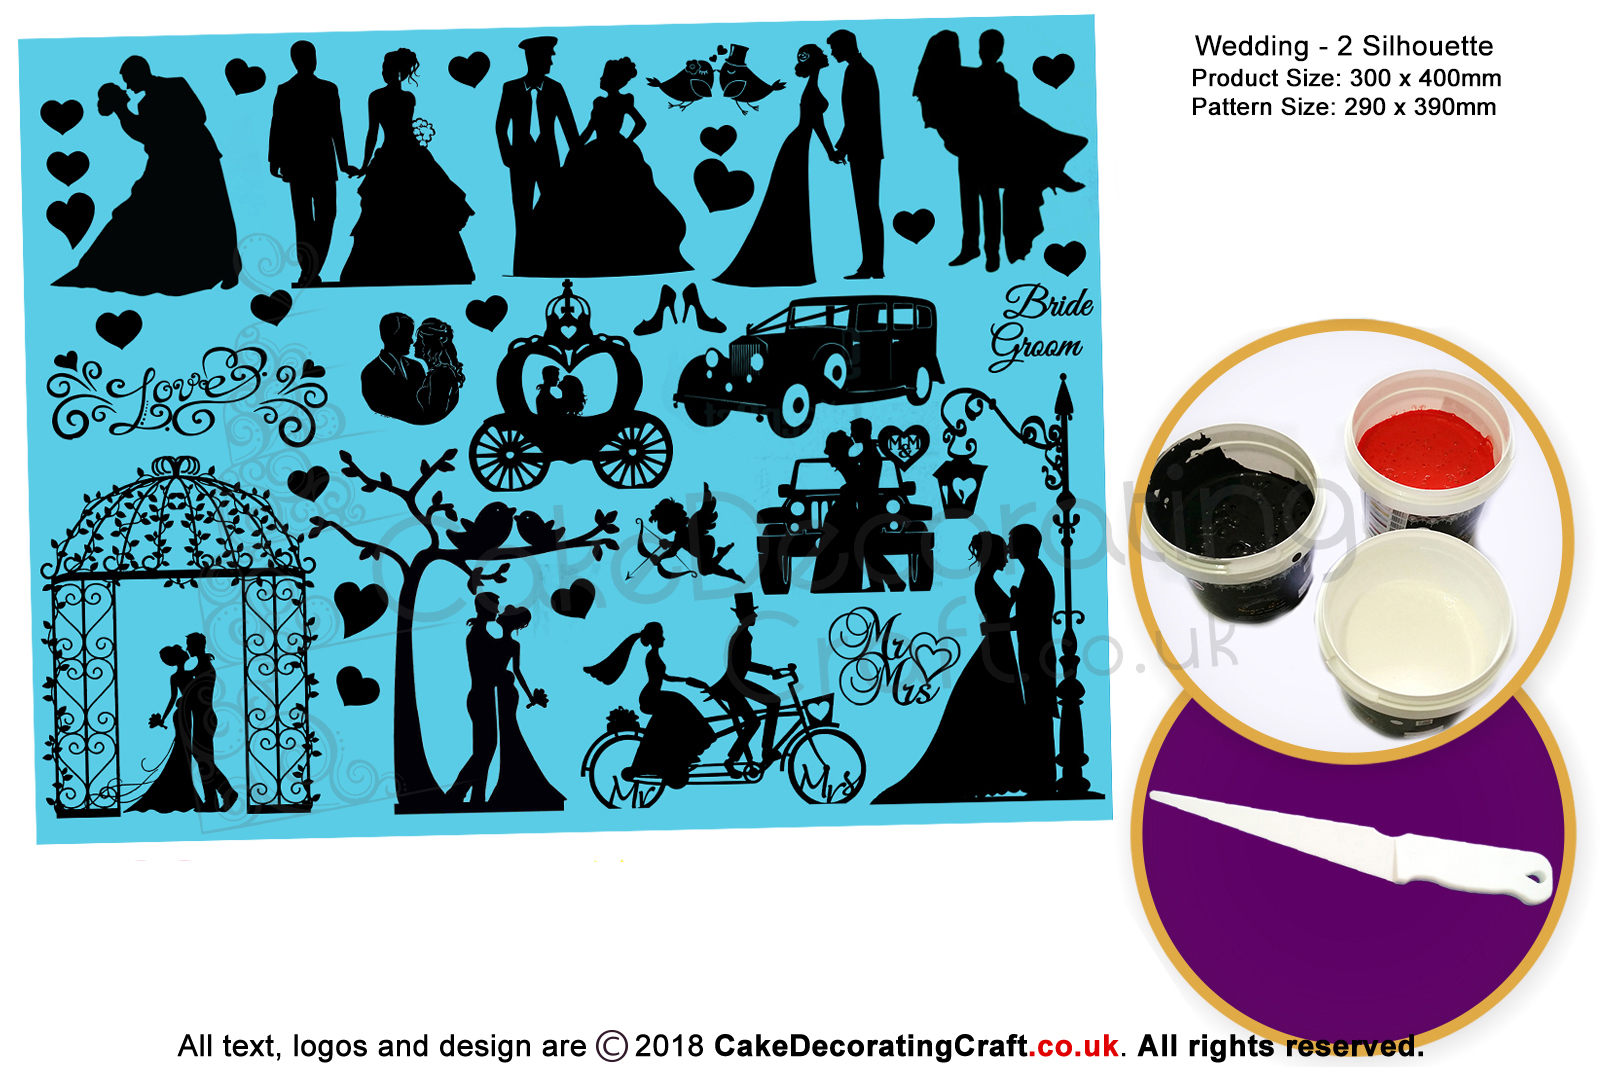 Wedding Love | Silhouette Cake Design Starter Kits | Cupcake Cookies Cake Decorating Craft Tool